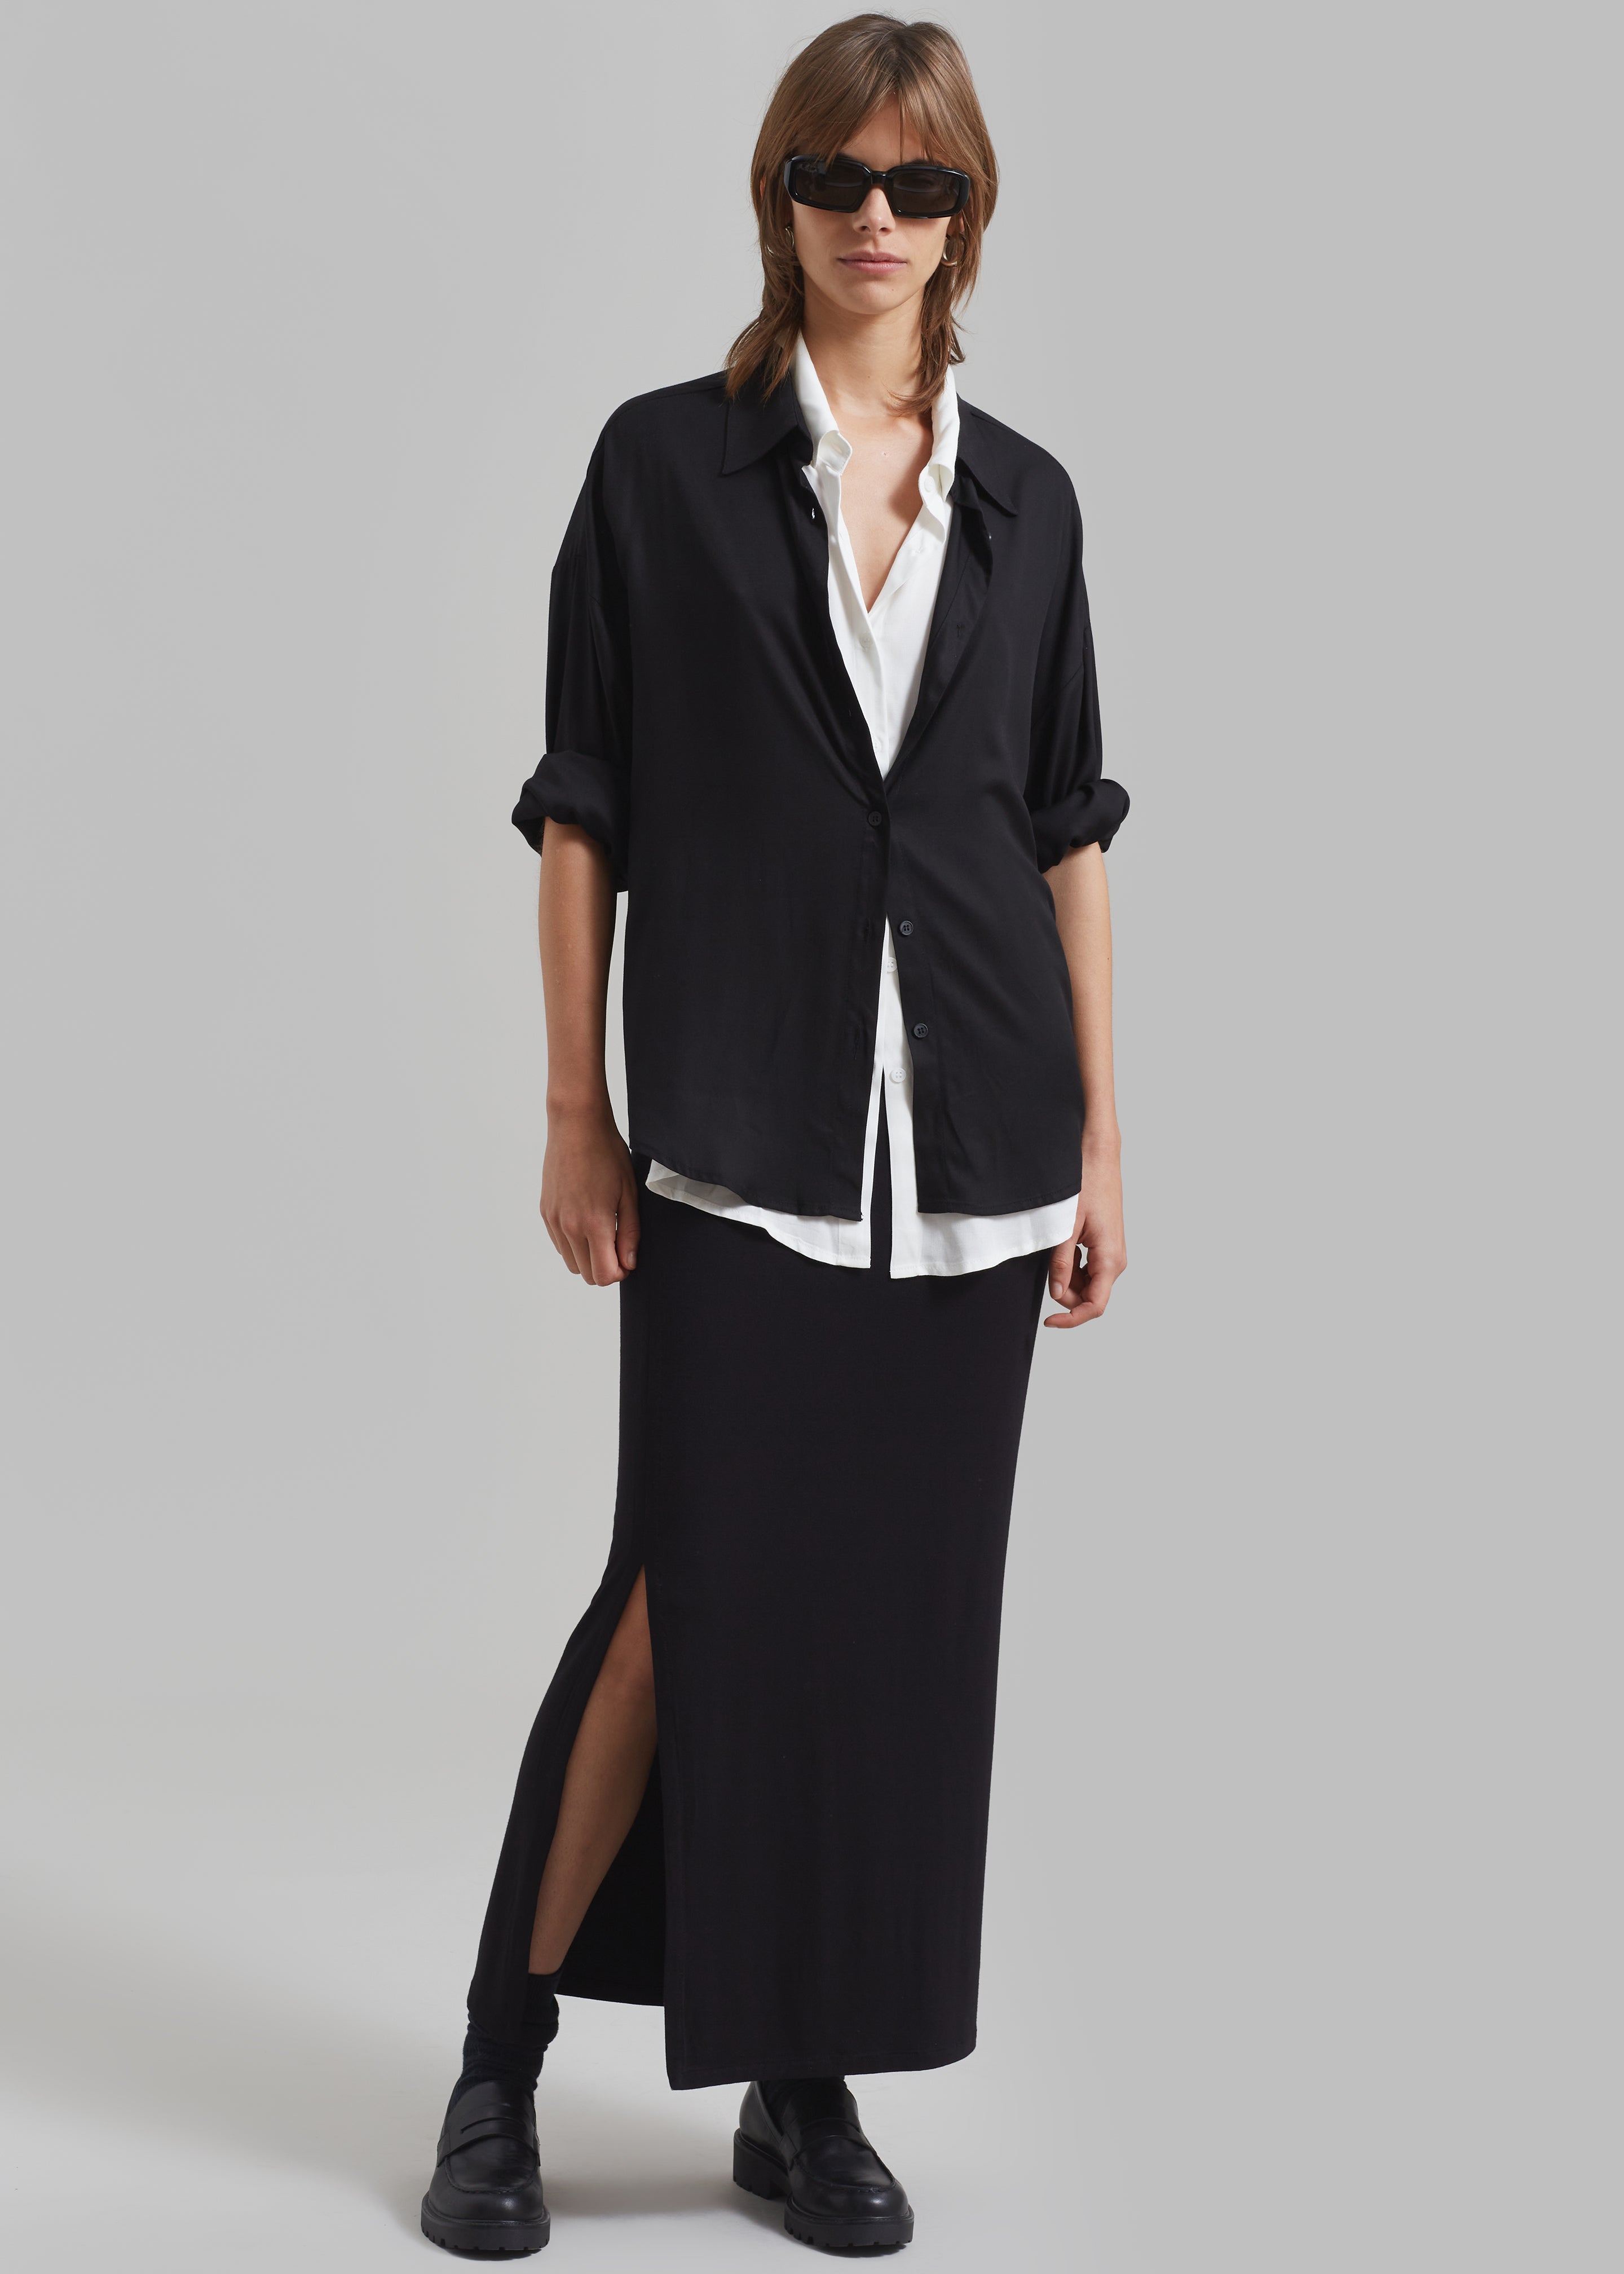 Ann Double Layer Shirt - Black/White - 10